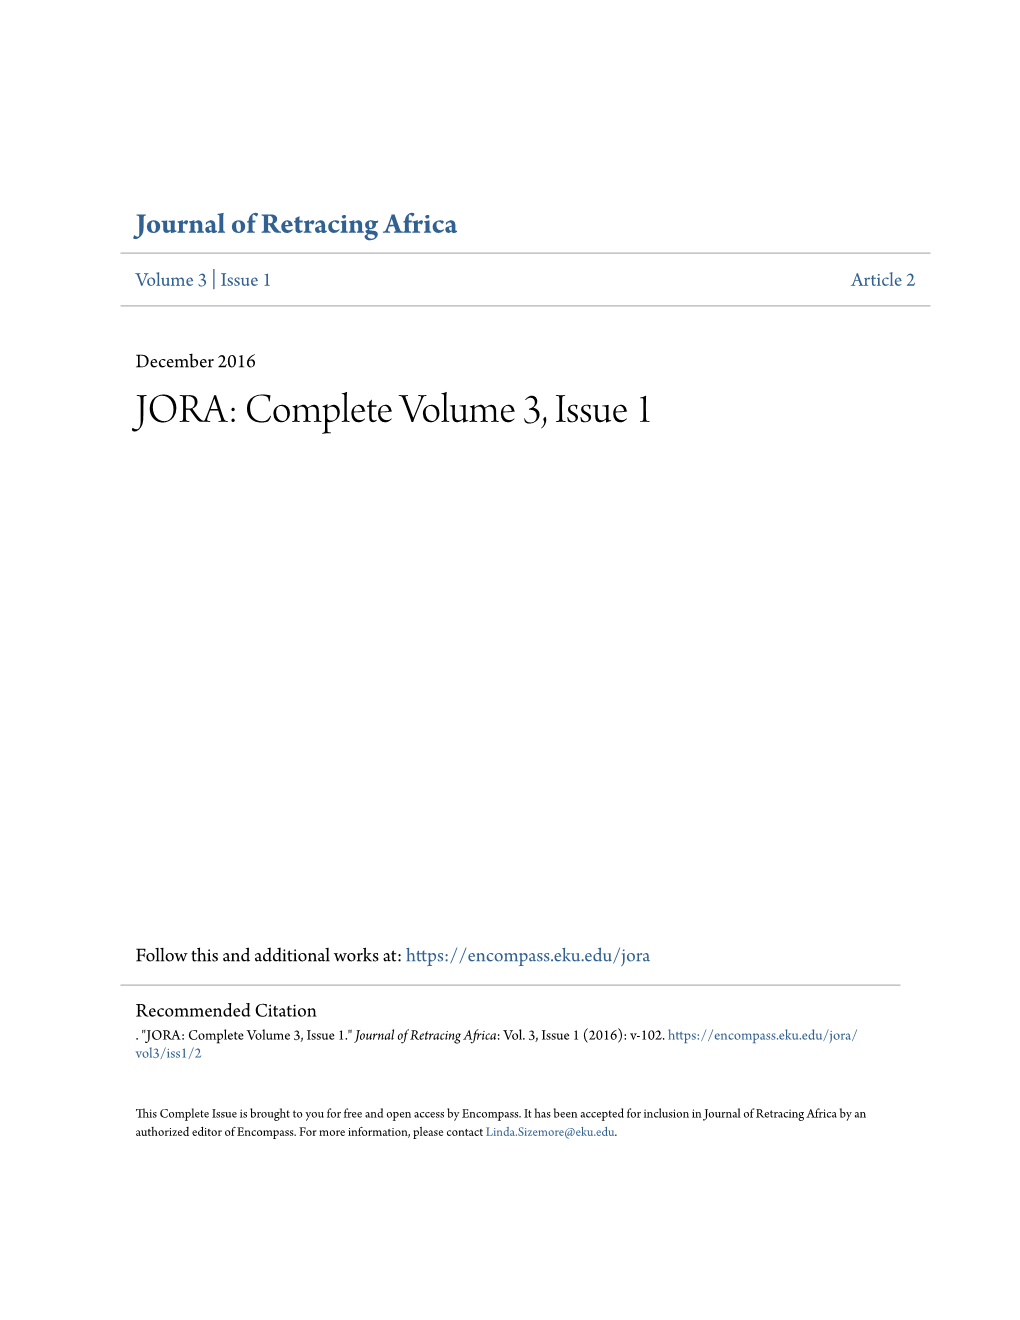 JORA: Complete Volume 3, Issue 1